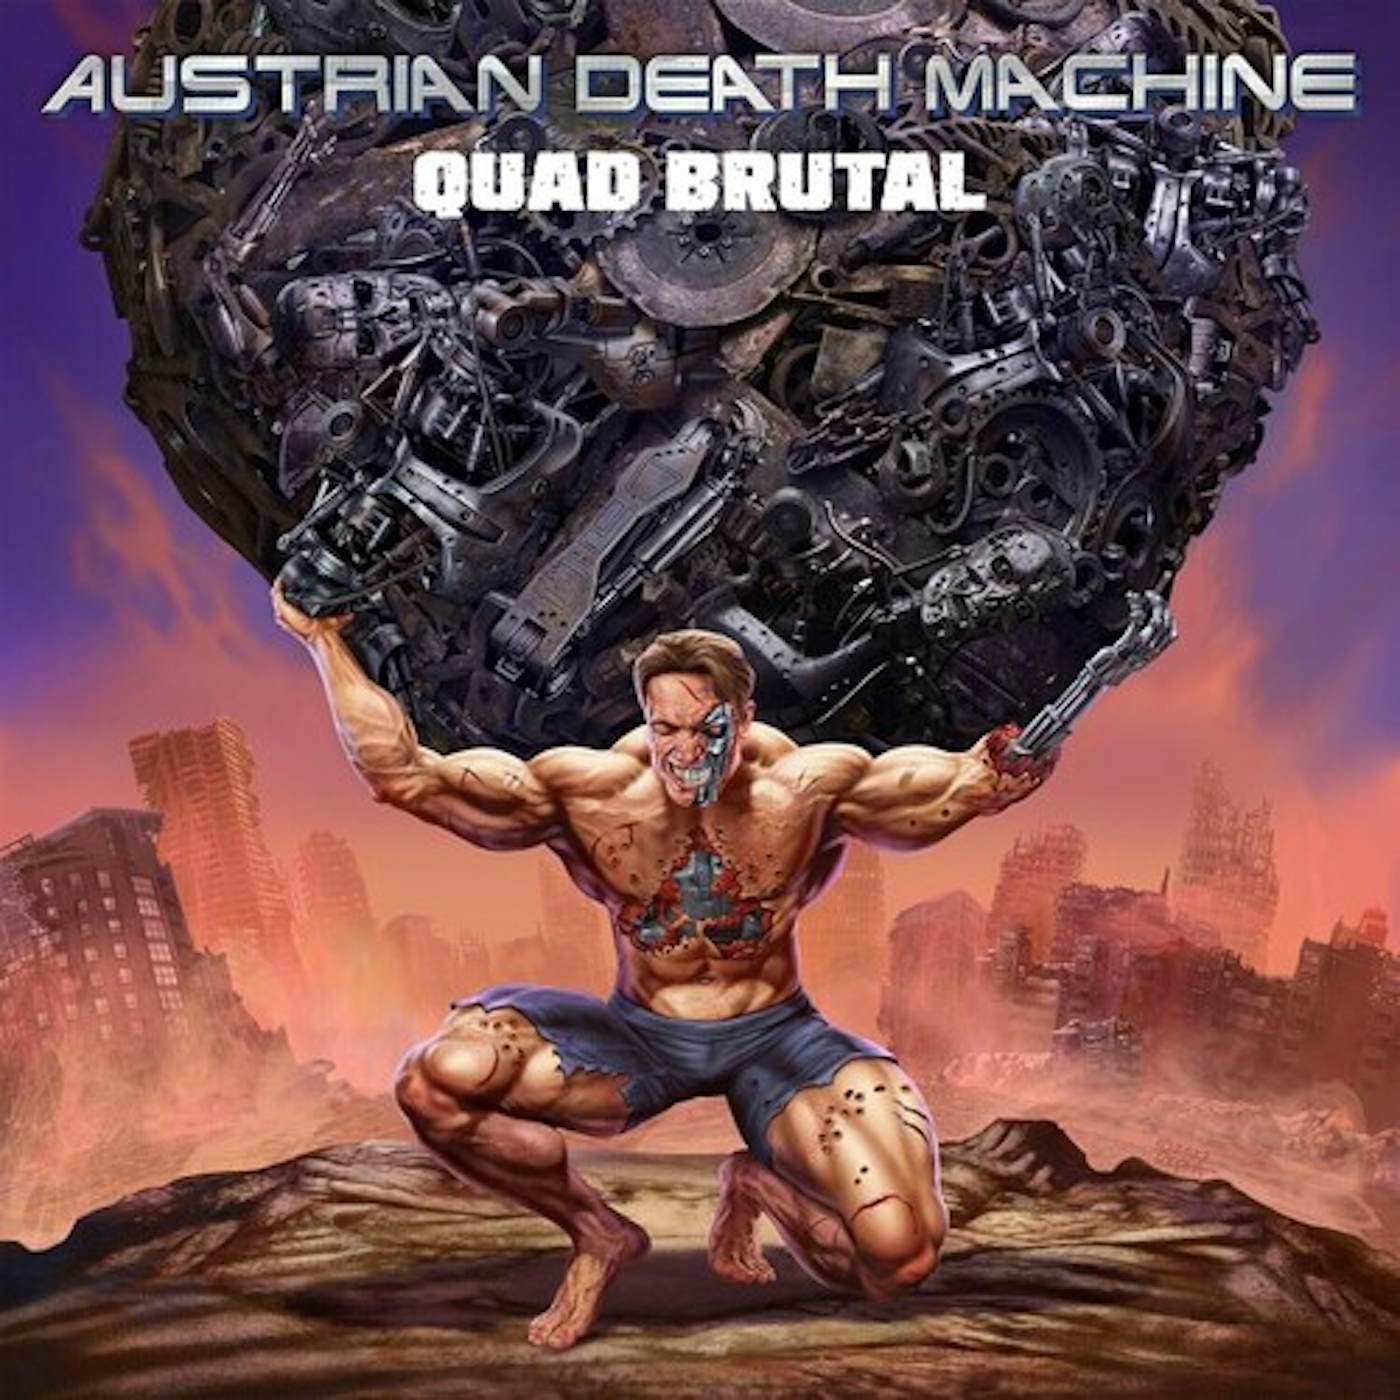 Austrian Death Machine QUAD BRUTAL CD